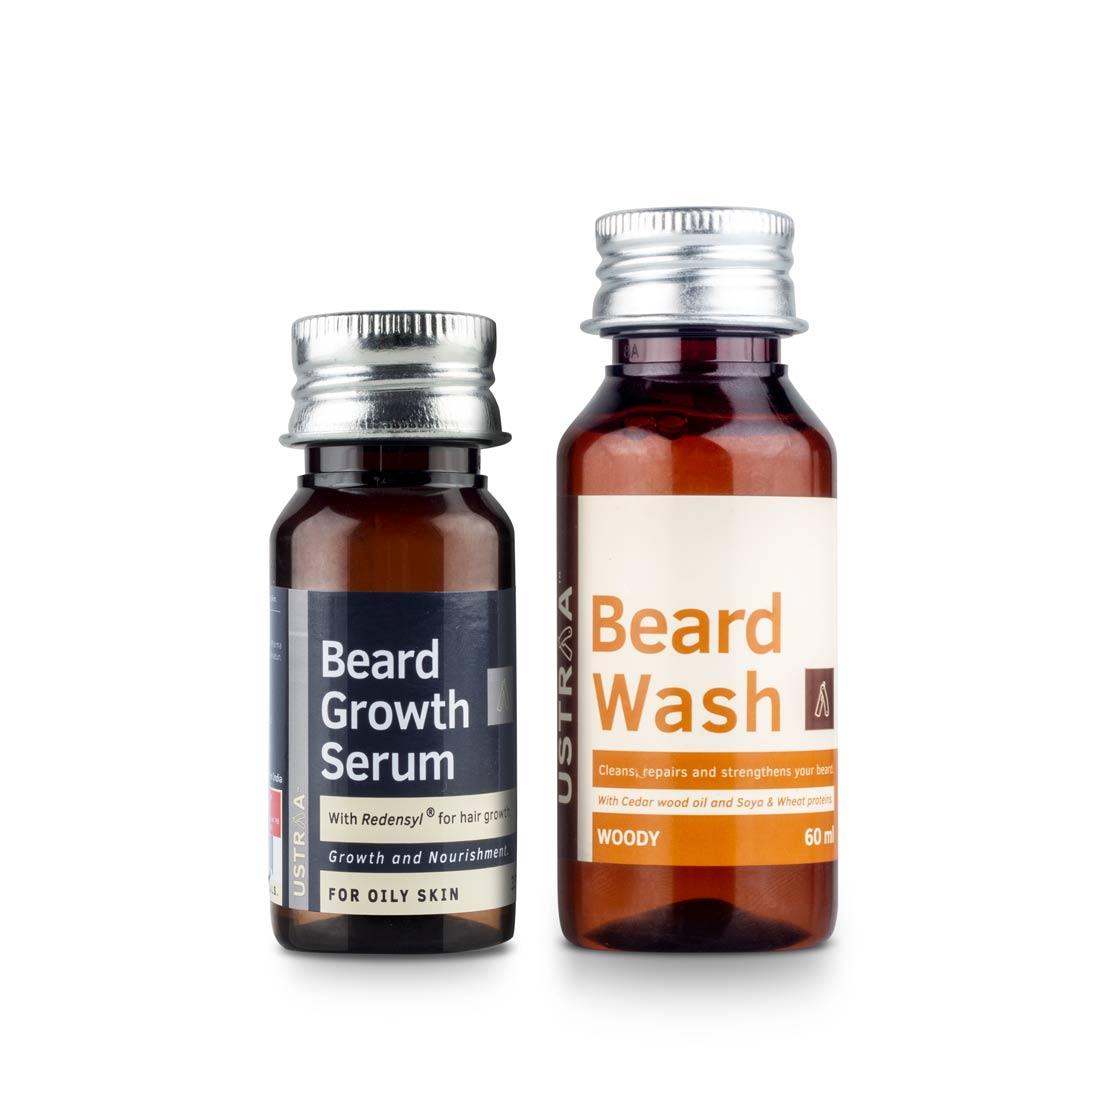 Beard Growth Serum & Beard Wash (Woody)